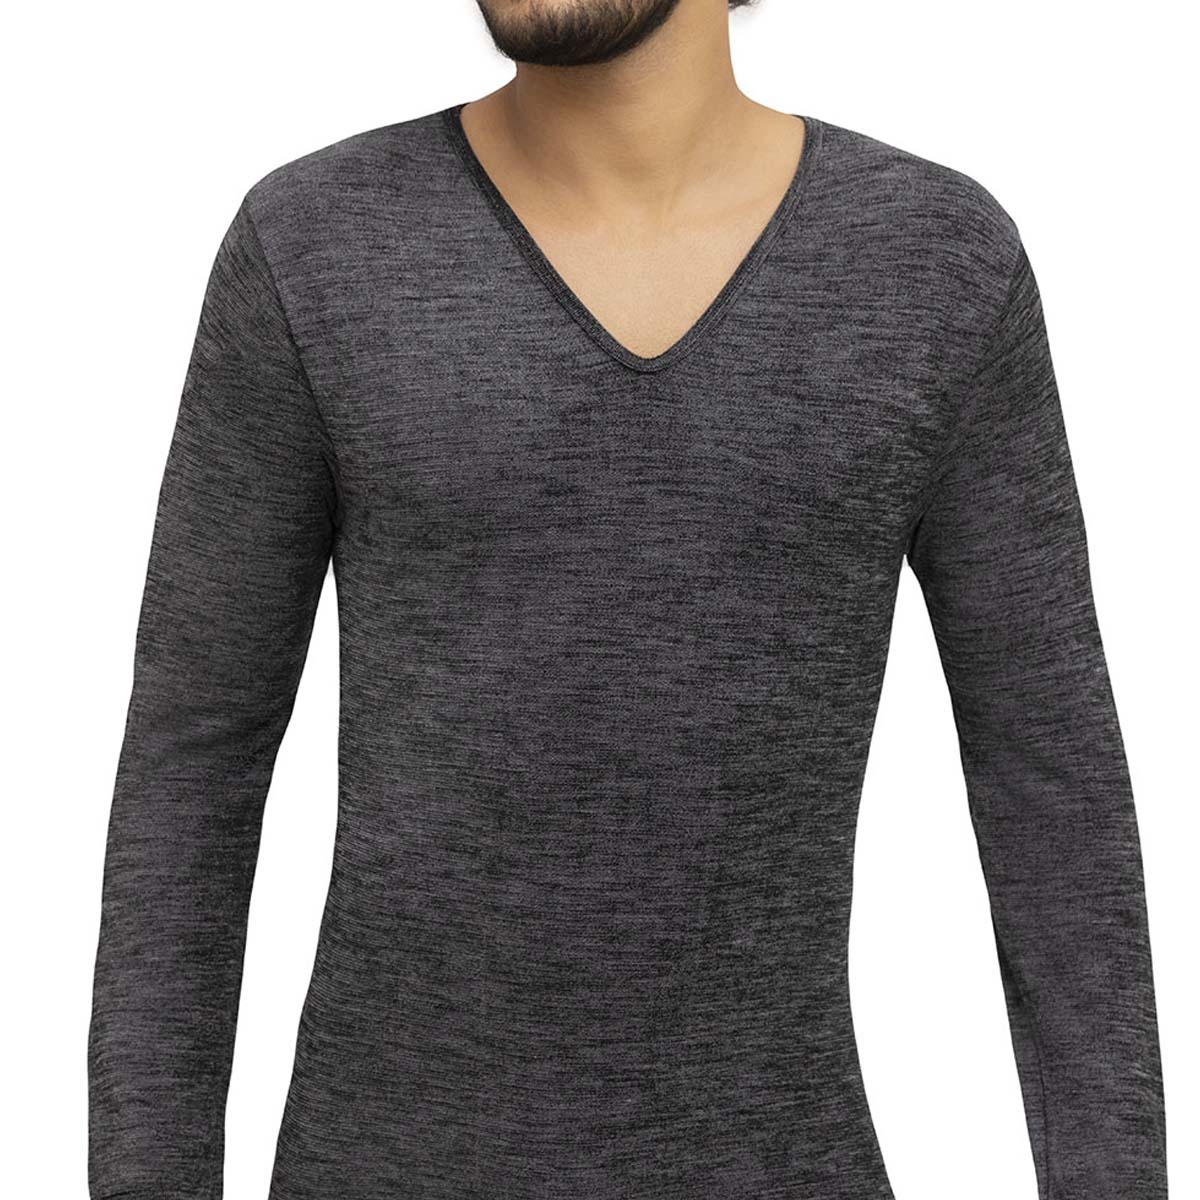  Camiseta de lana merino para hombre – Camisas de lana